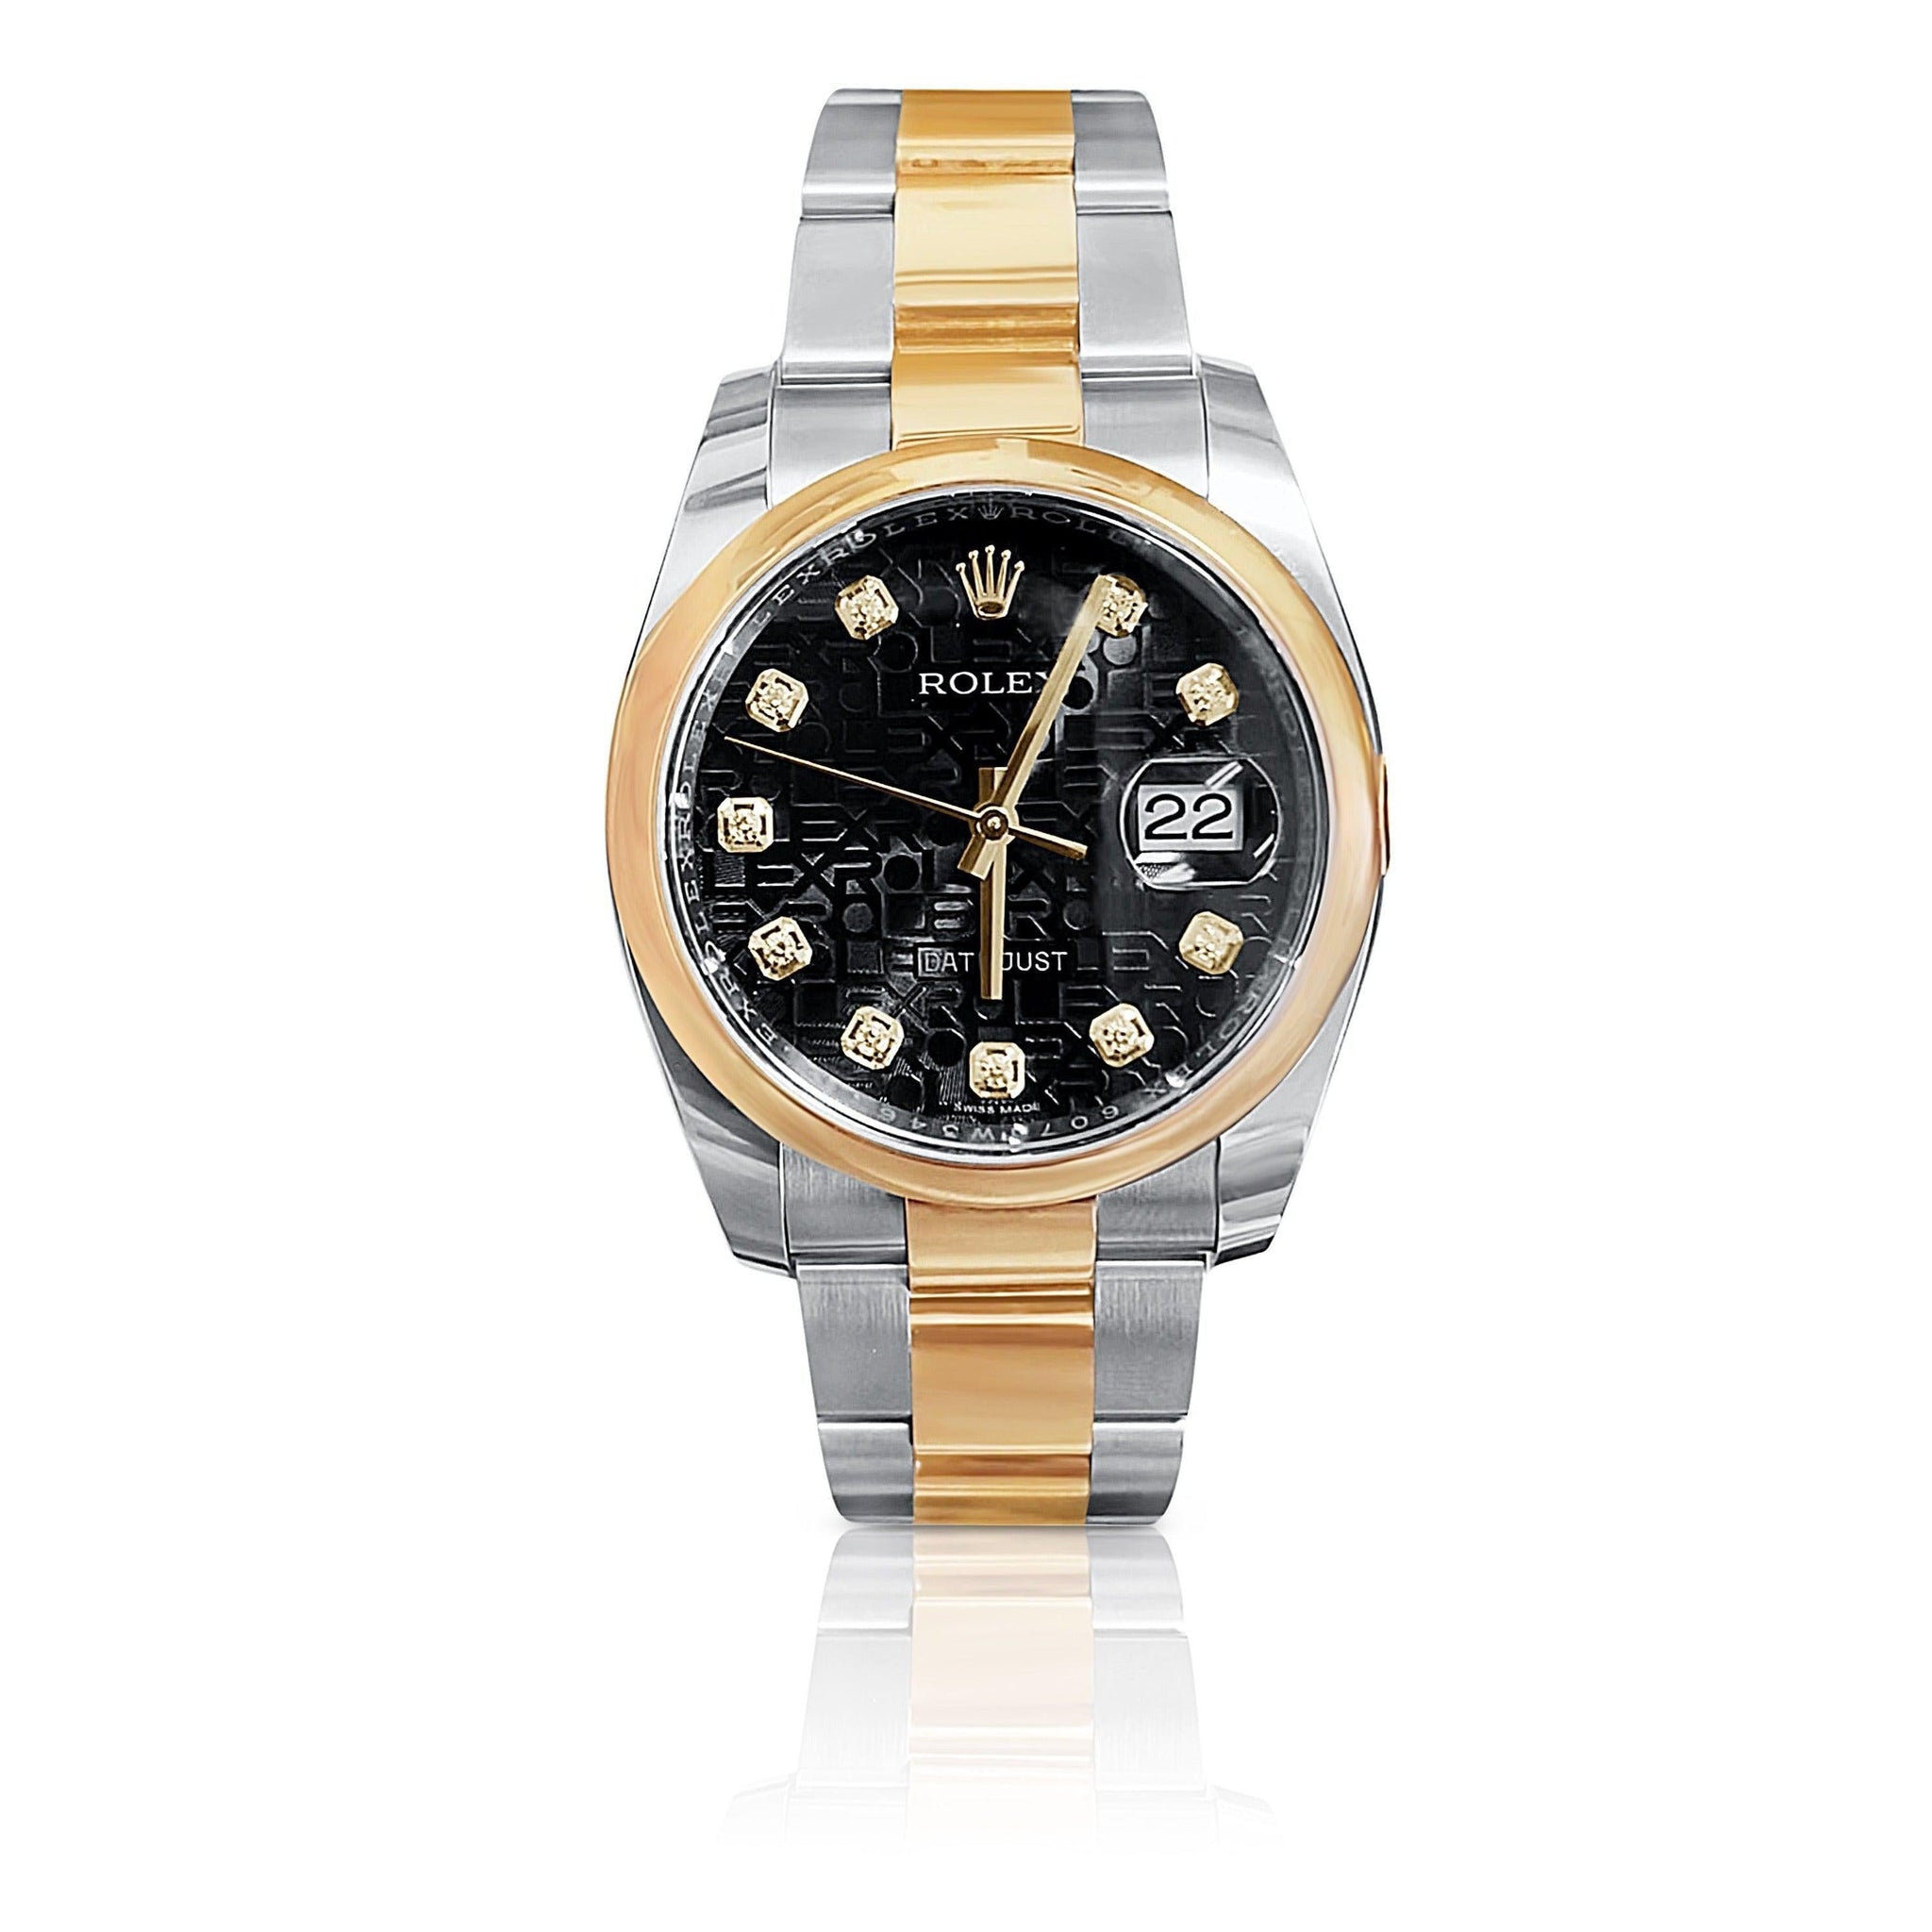 Rolex Datejust 36 Black Dial Watch